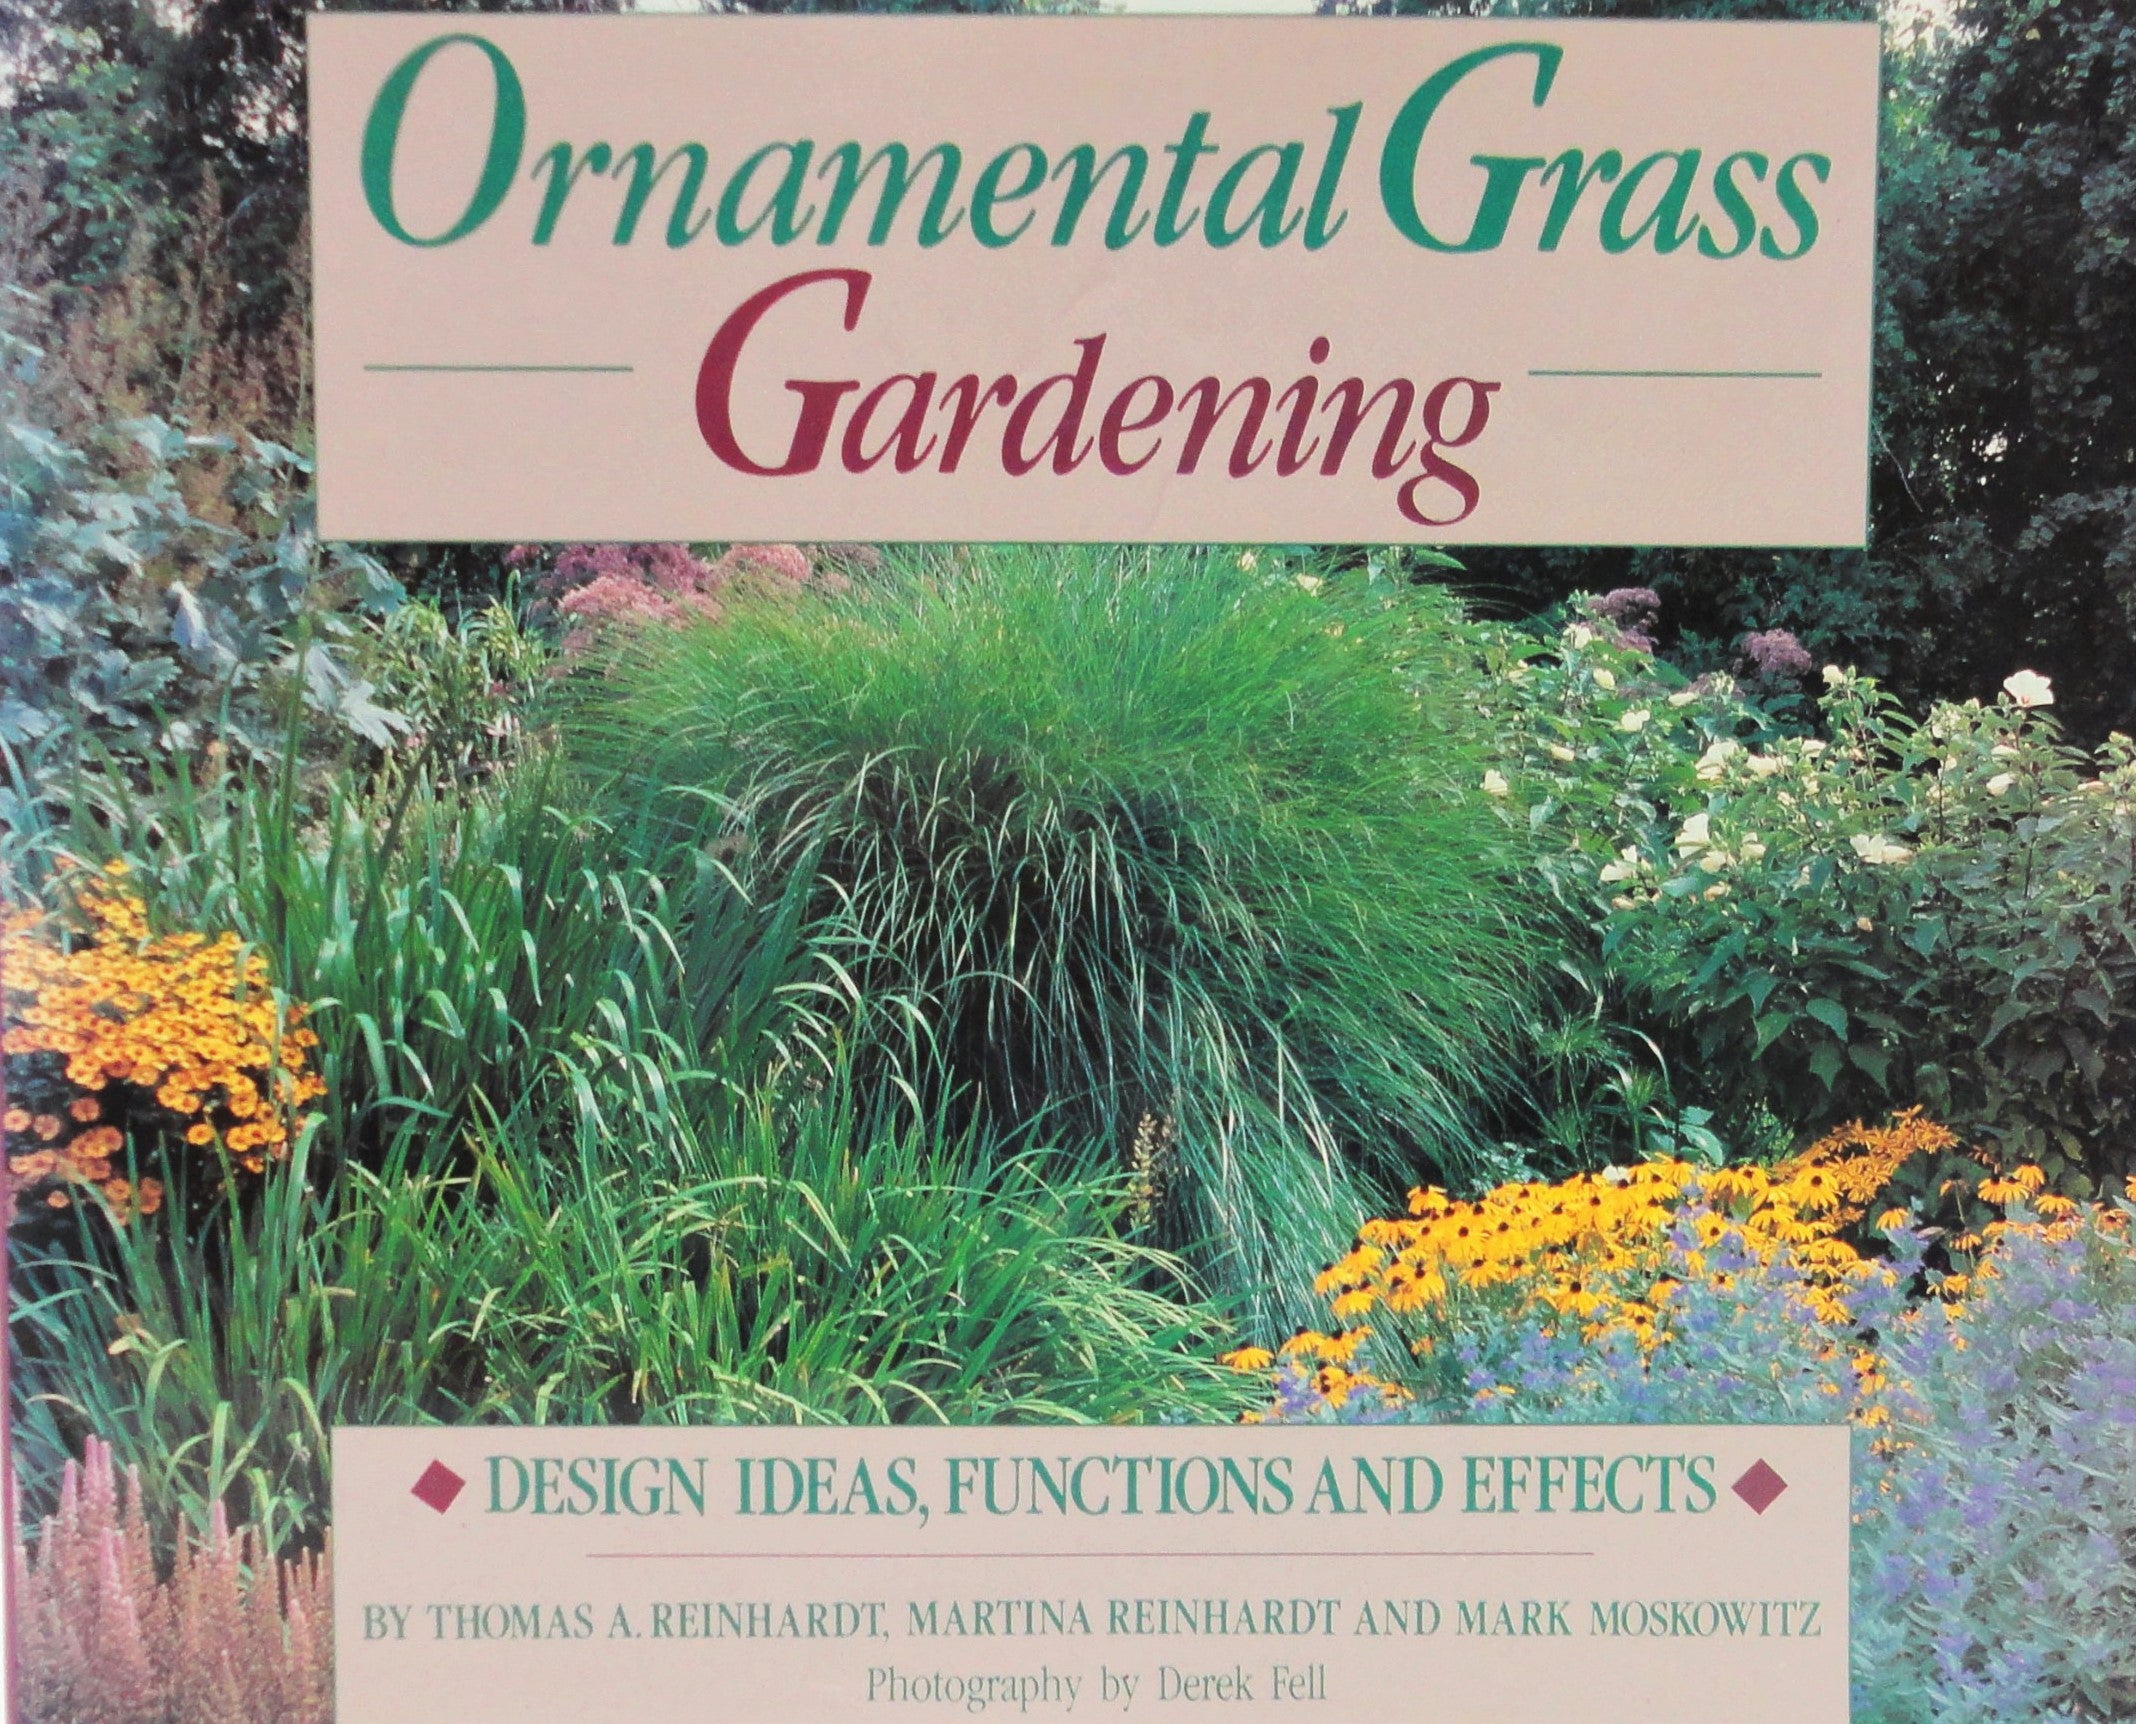 Ornamental Grass Gardening: Design Ideas, Functions and Effects - Thomas A. Reinhardt